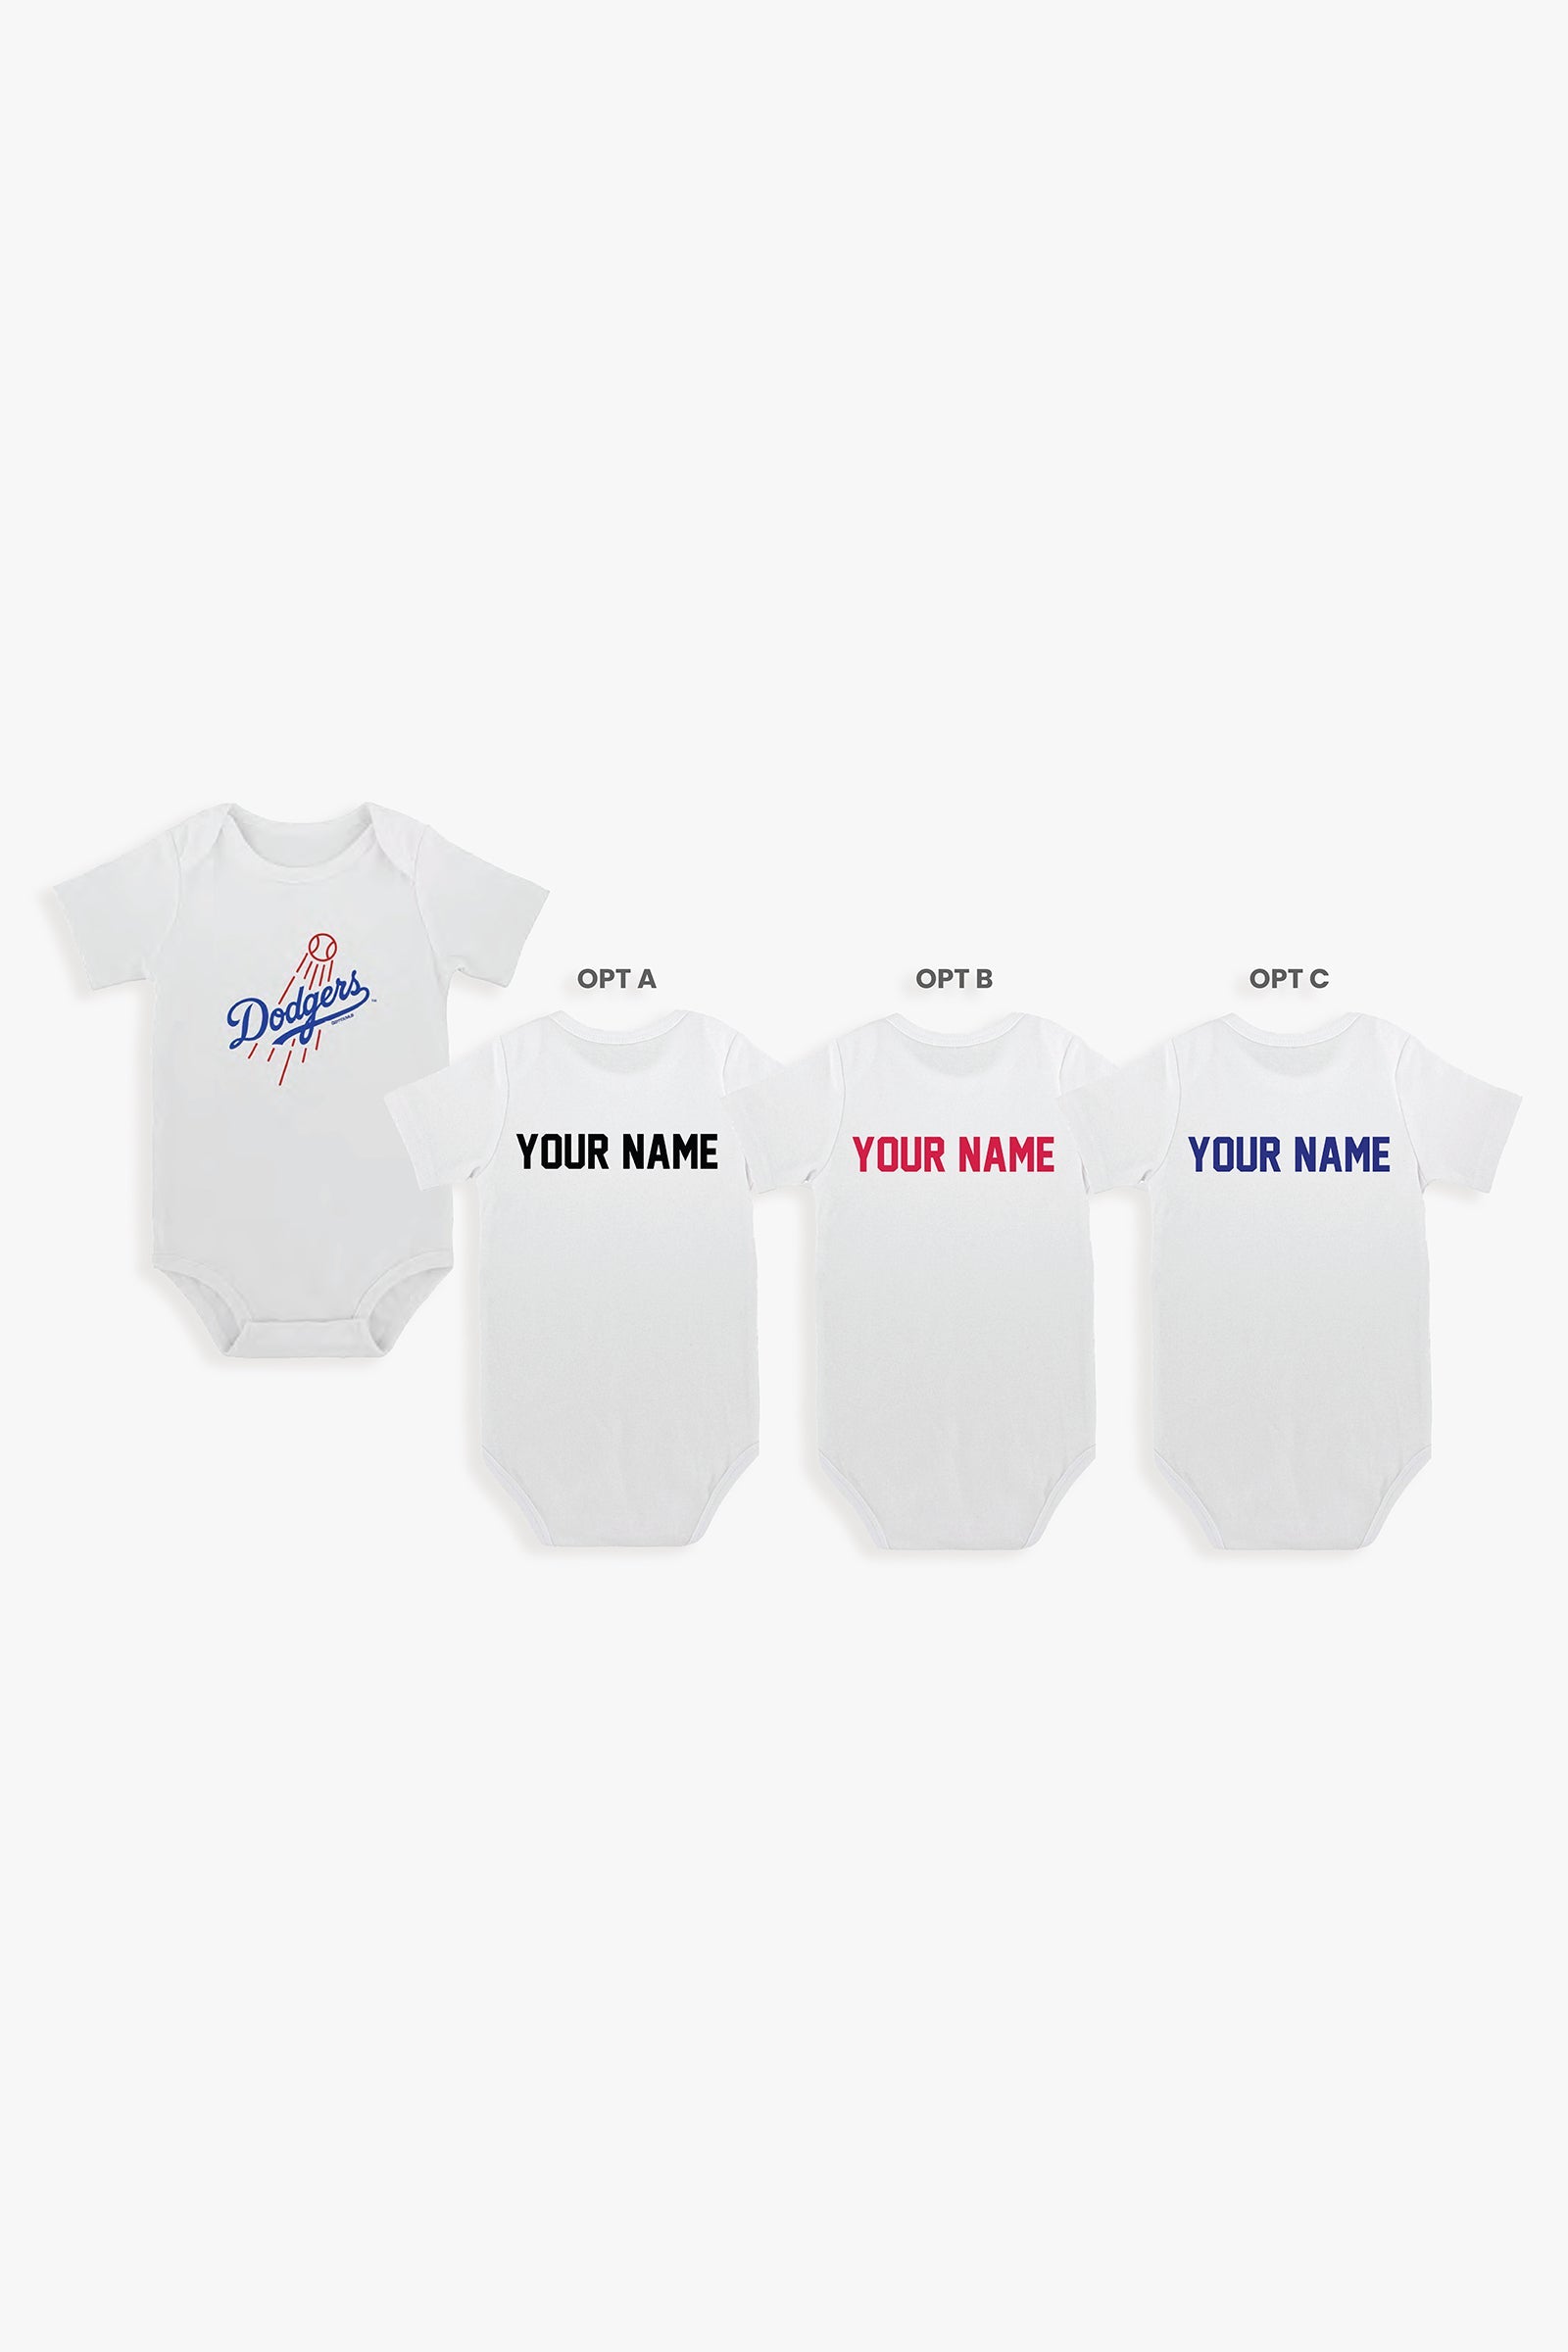 Customizable MLB Baby Bodysuit in White (6-9 Months)